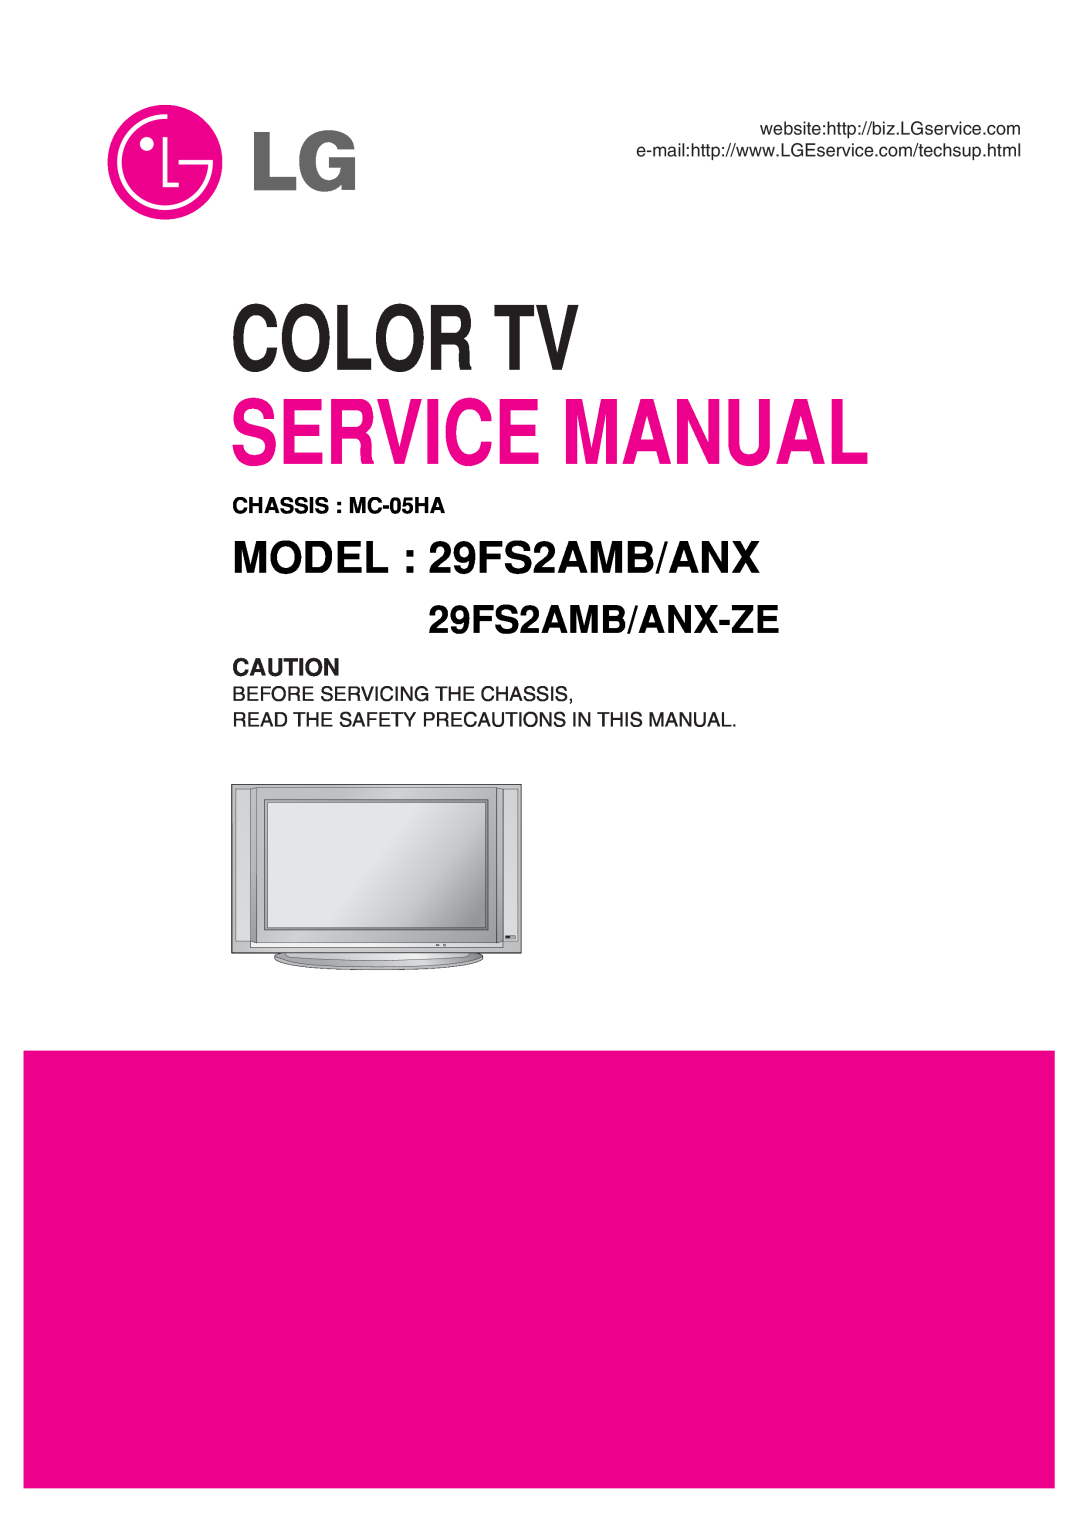 LG Electronics service manual CHASSIS MC-05HA, Color Tv Service Manual, MODEL 29FS2AMB/ANX-ZE 